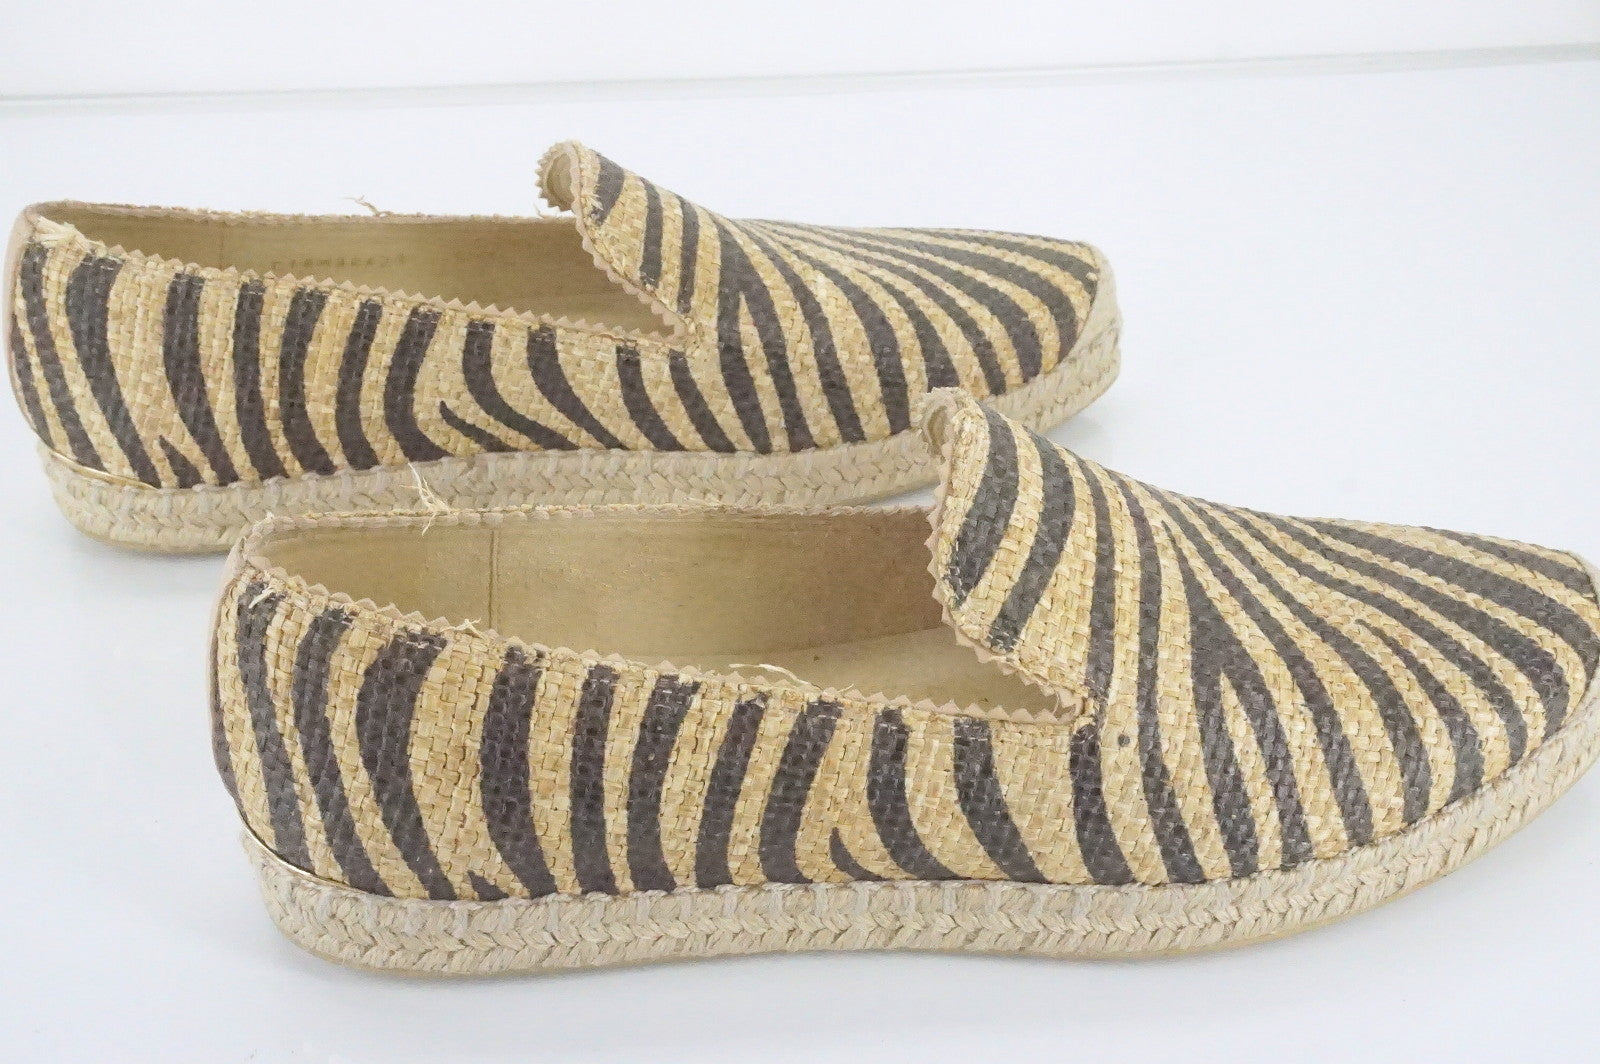 Stuart Weitzman Catalan Striped Espadrille Flat Loafers size 9.5 New $265 SZ Toe